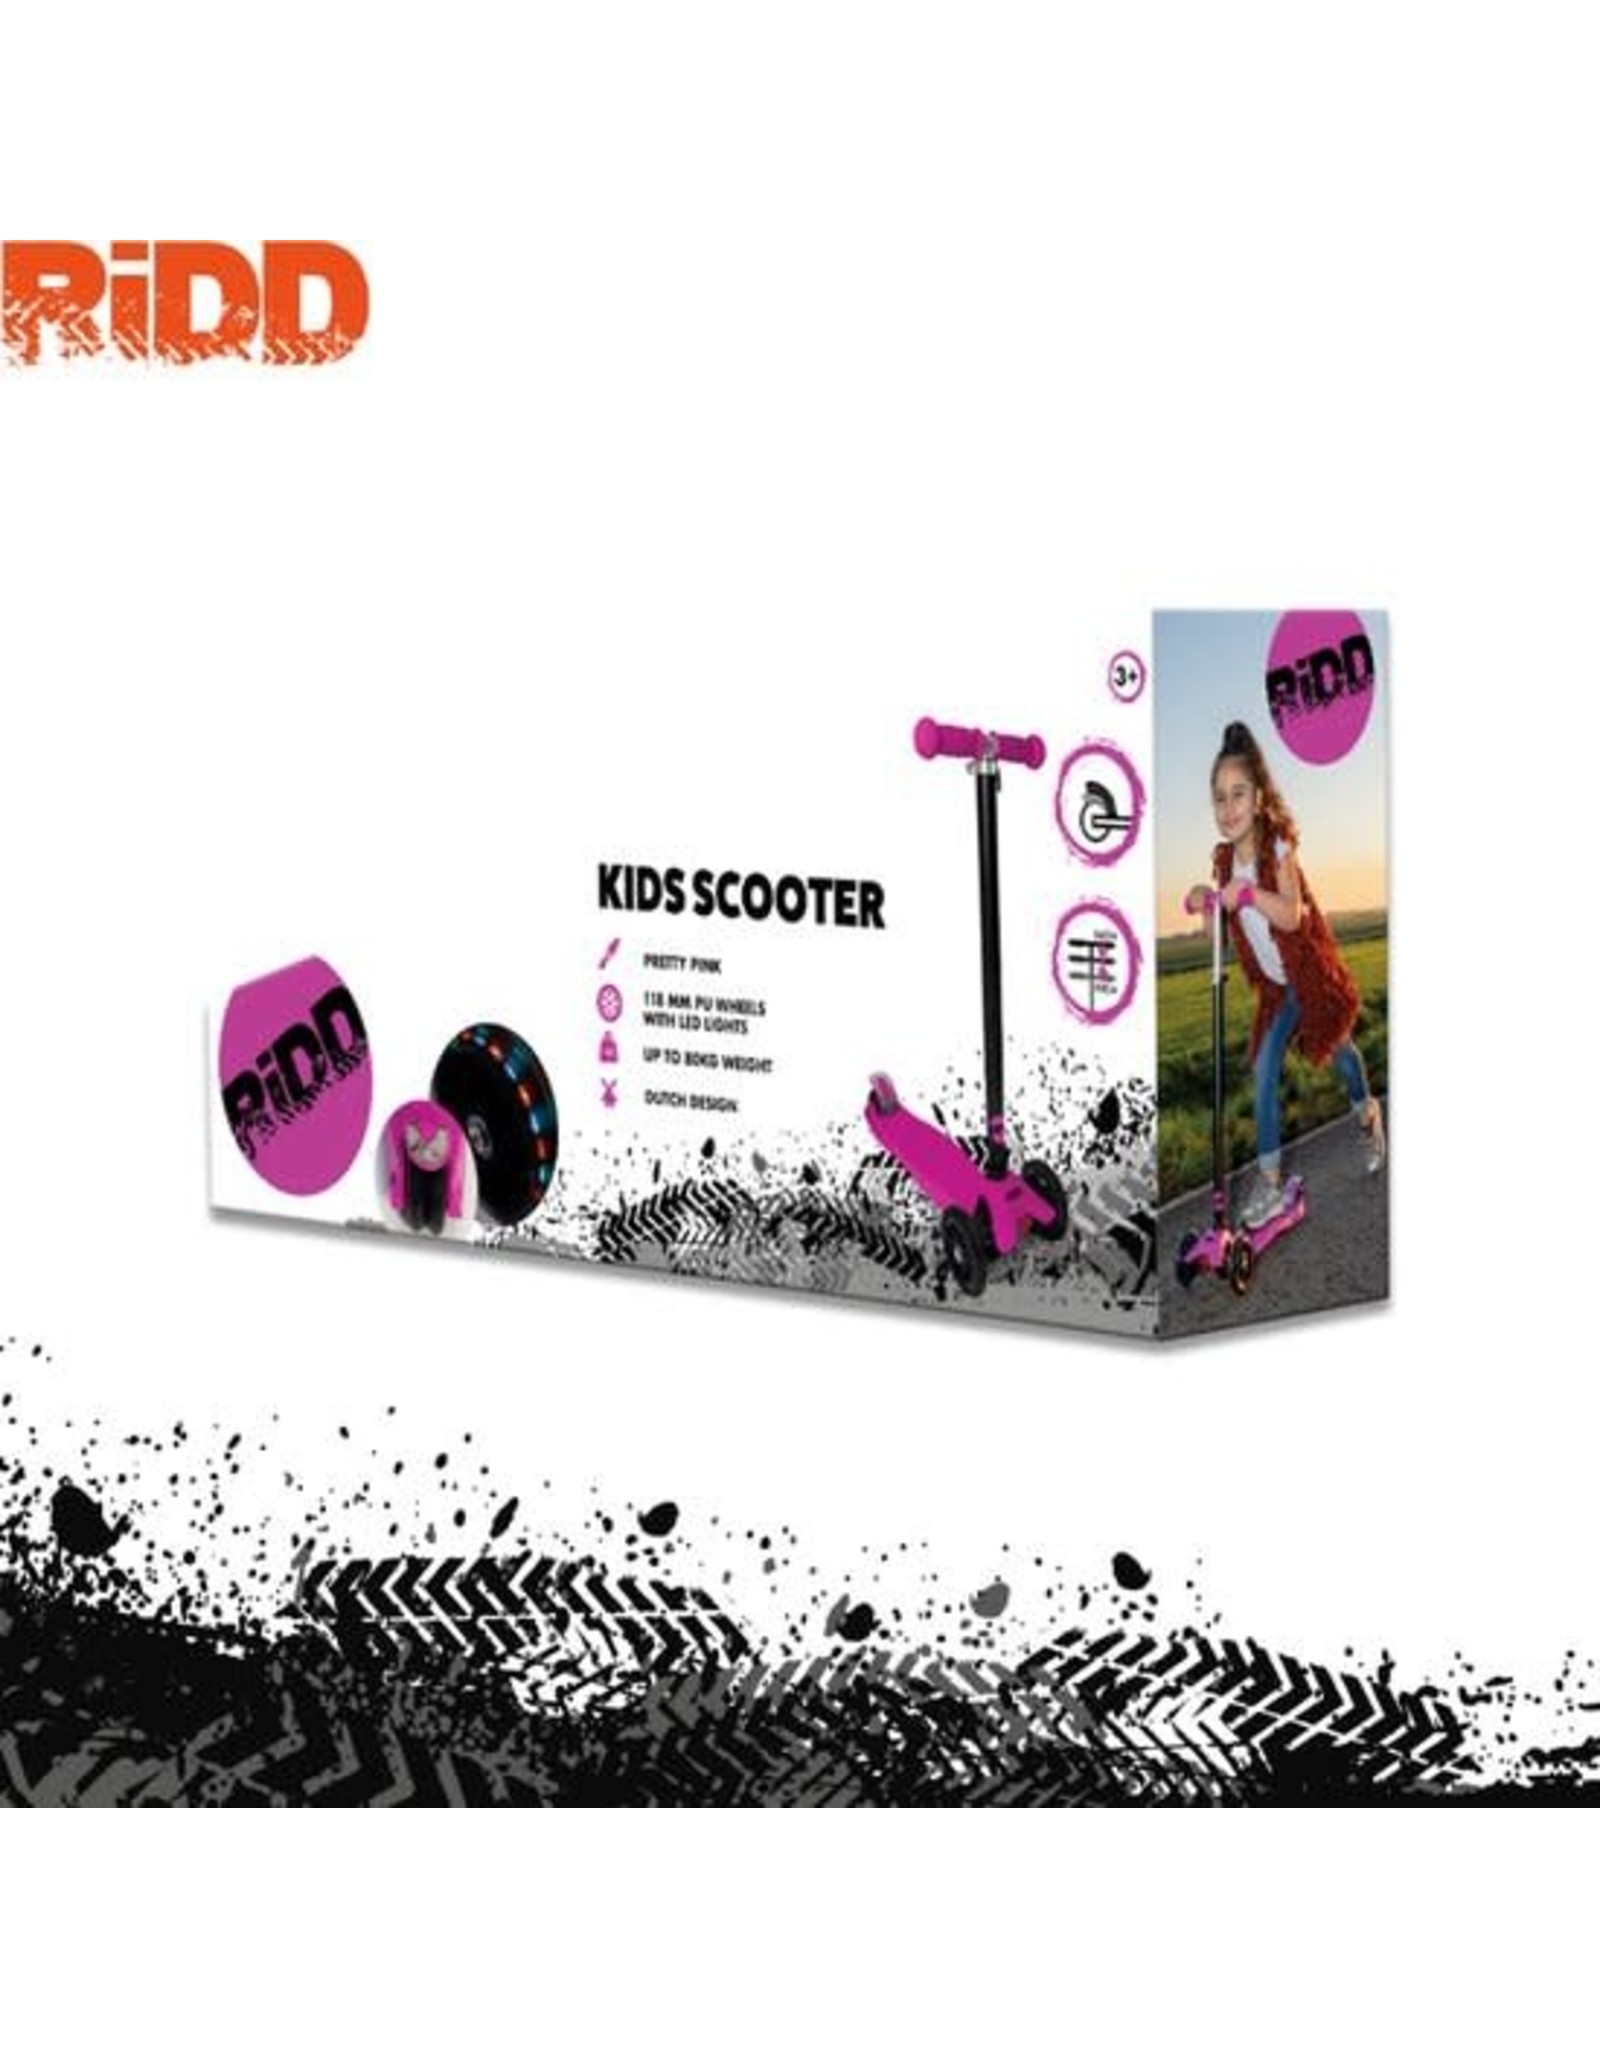 RIDD RiDD Kids Scooter - Stunt Scooter - Step - ABEC-7 - Vanaf 3 jaar - 2 Achterwielen met LED verlichting - RVS Rem - Pink - Roze